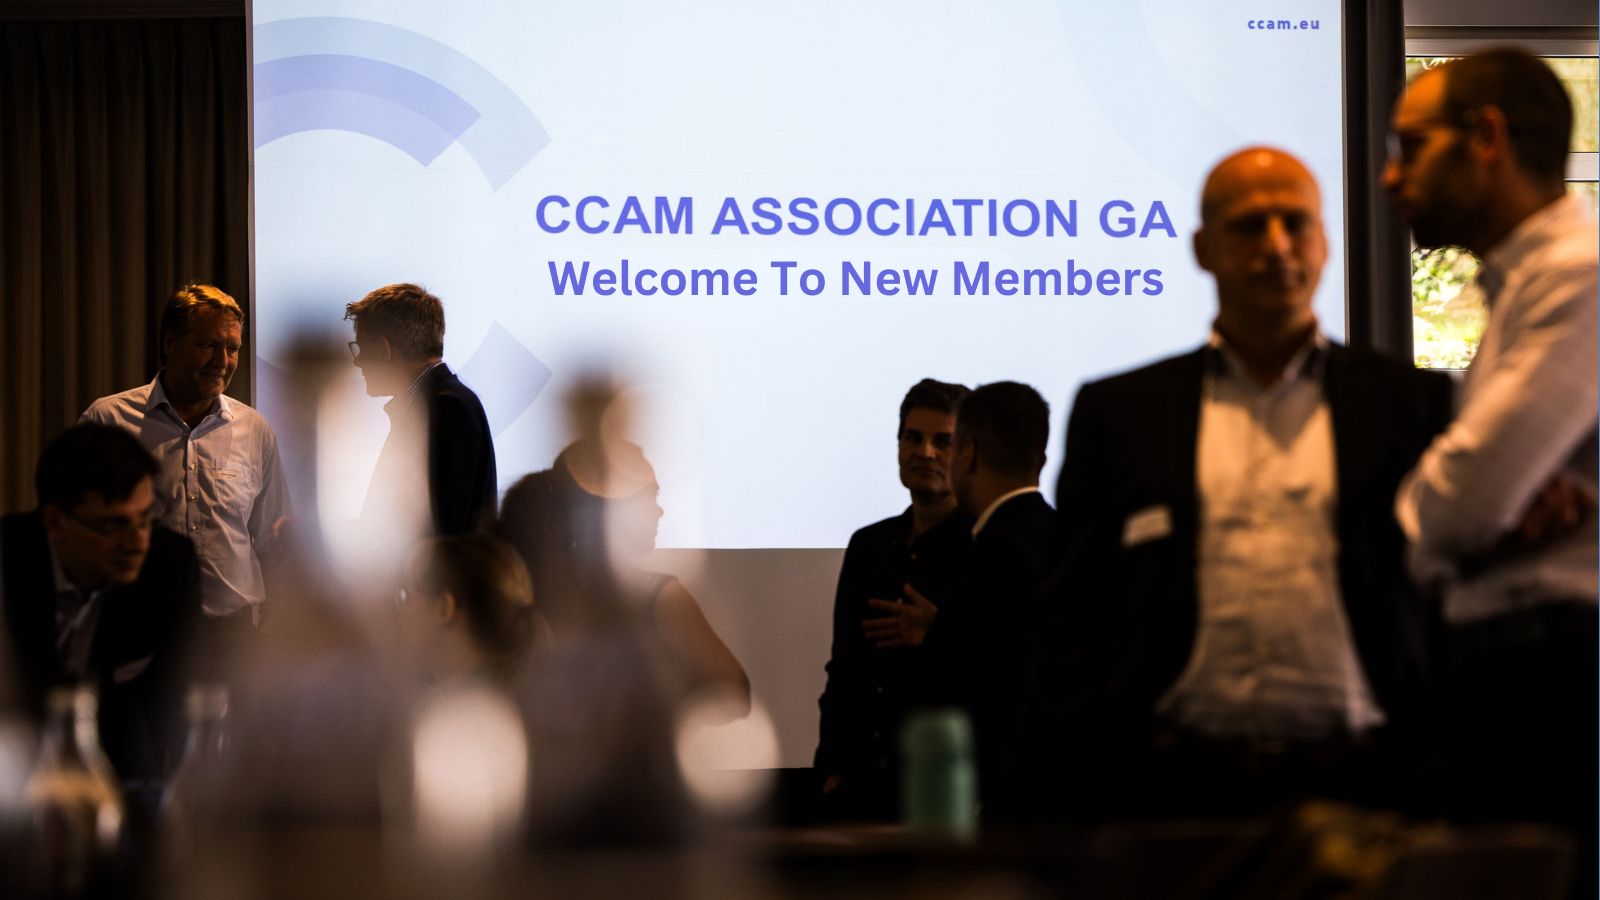 CCAM Partnership welcomes new members